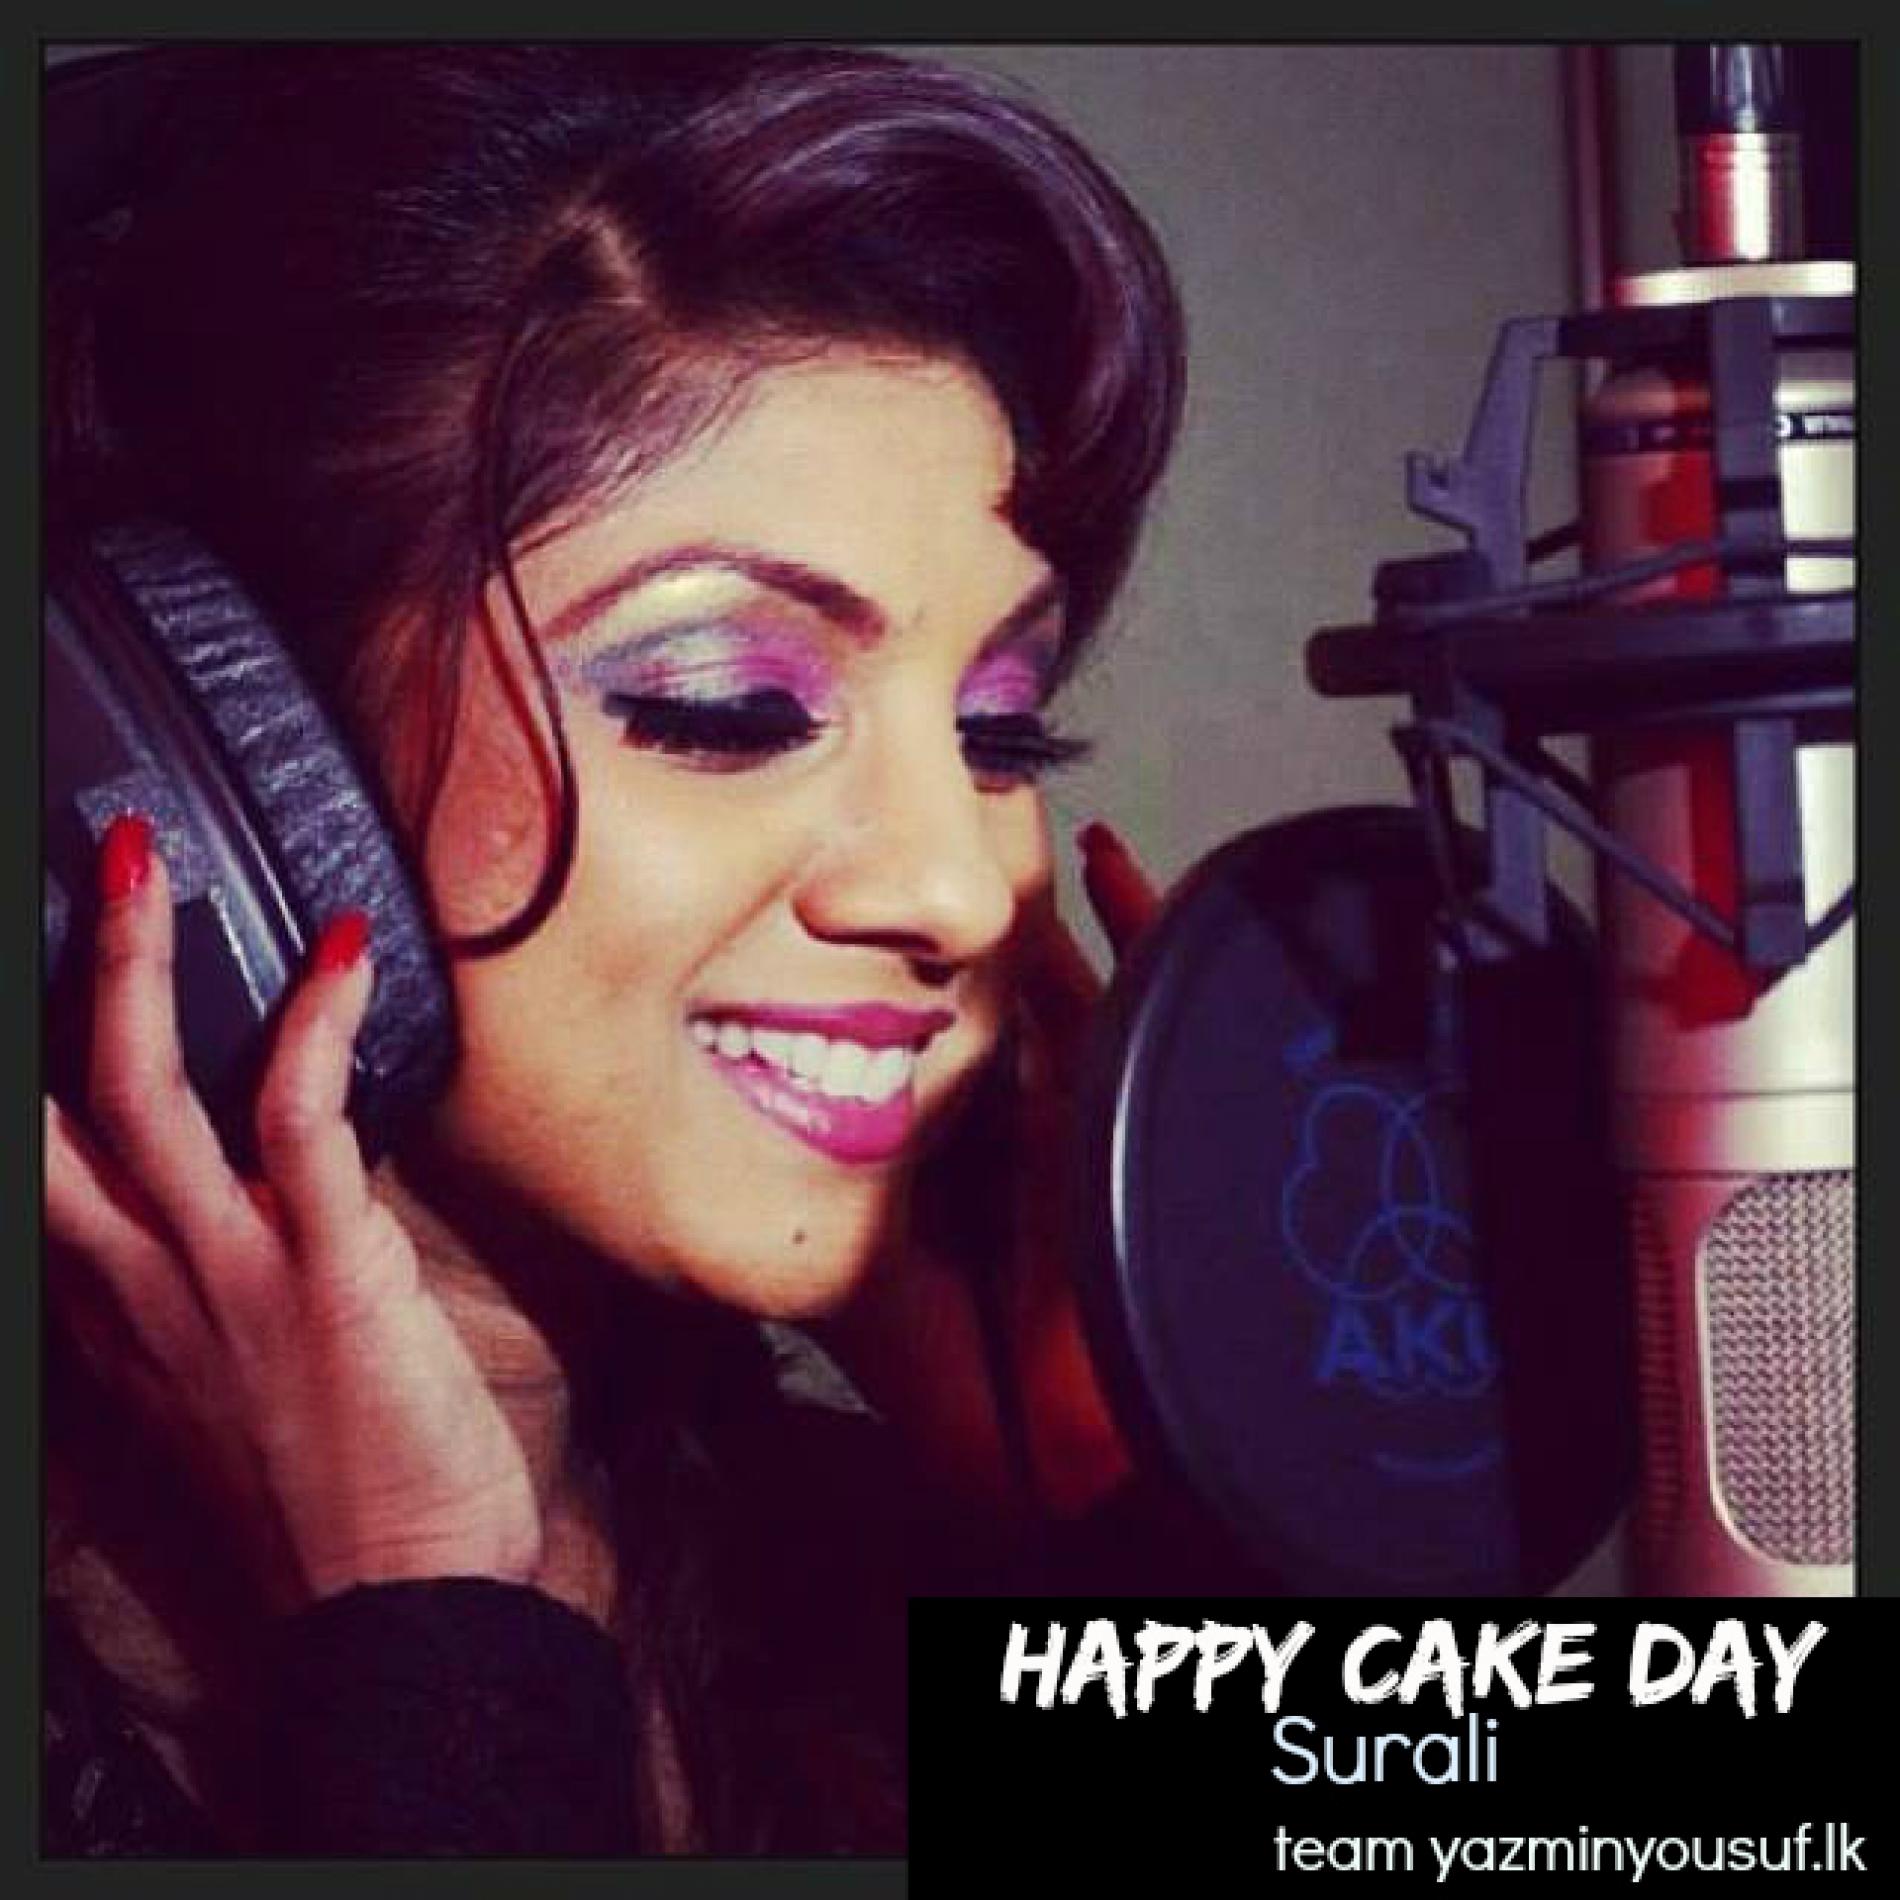 Happy Cake Day Surali!